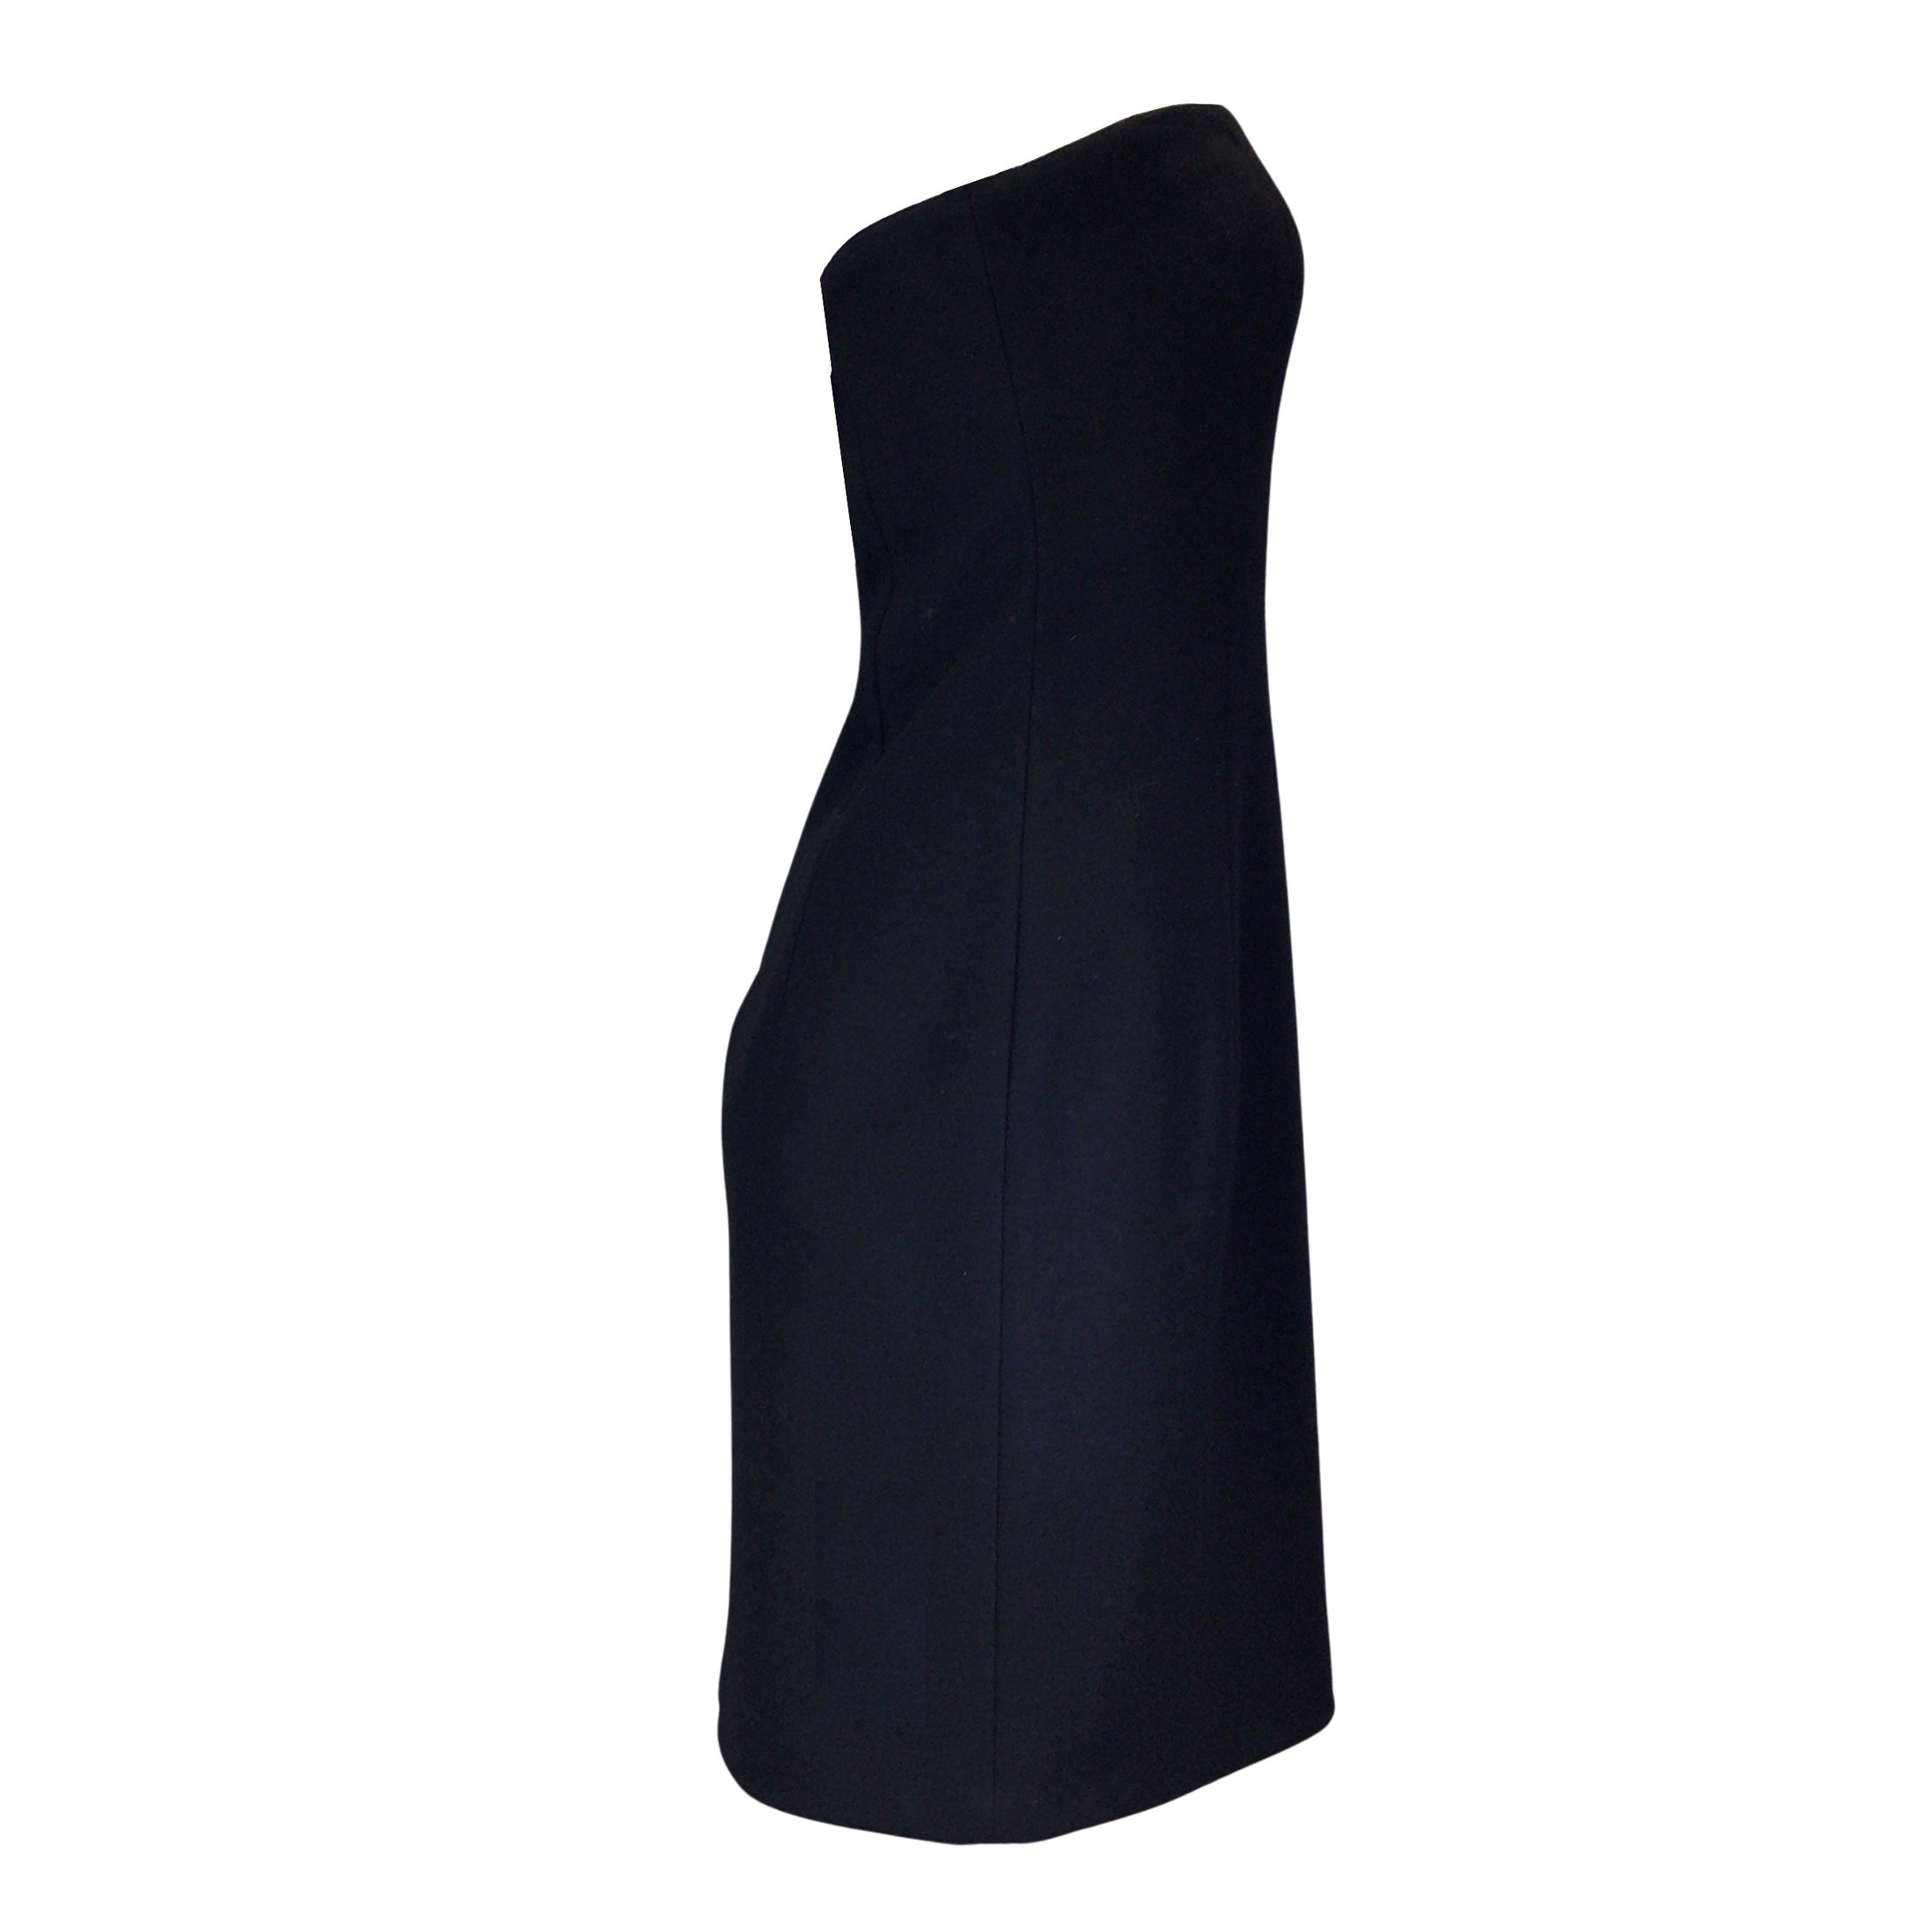 Michael Kors Black Strapless Wool Dress